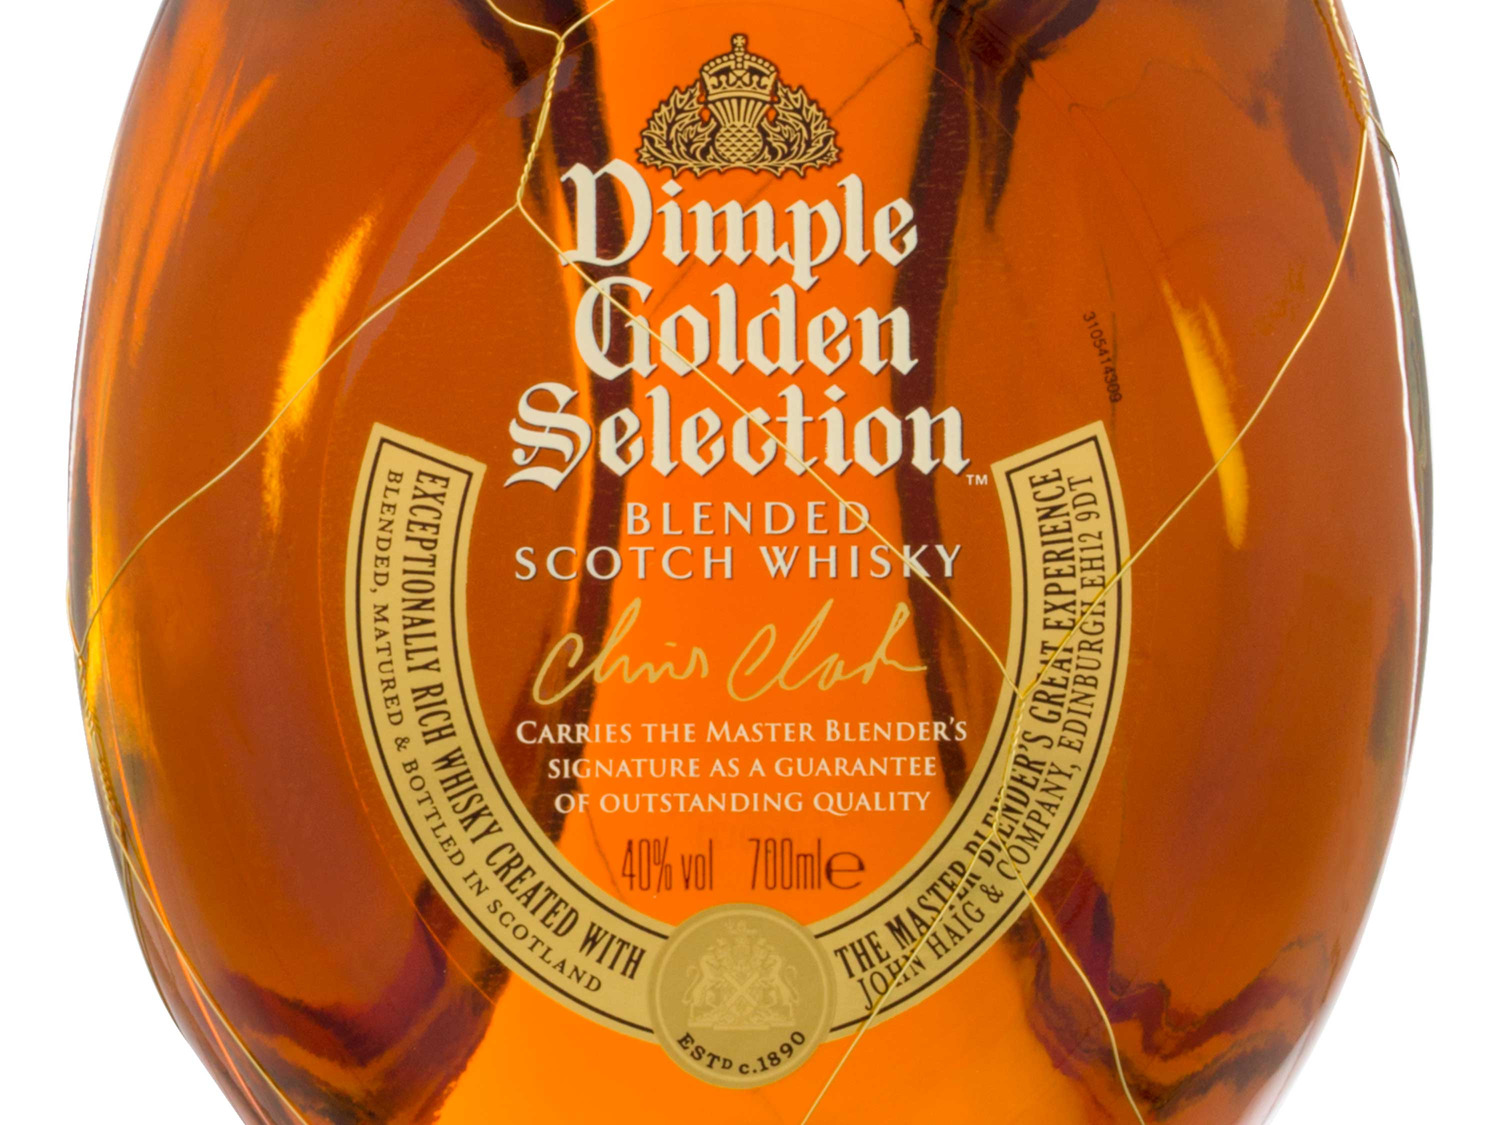 Dimple Golden Whisky 40% Selection Blended Scotch Vol